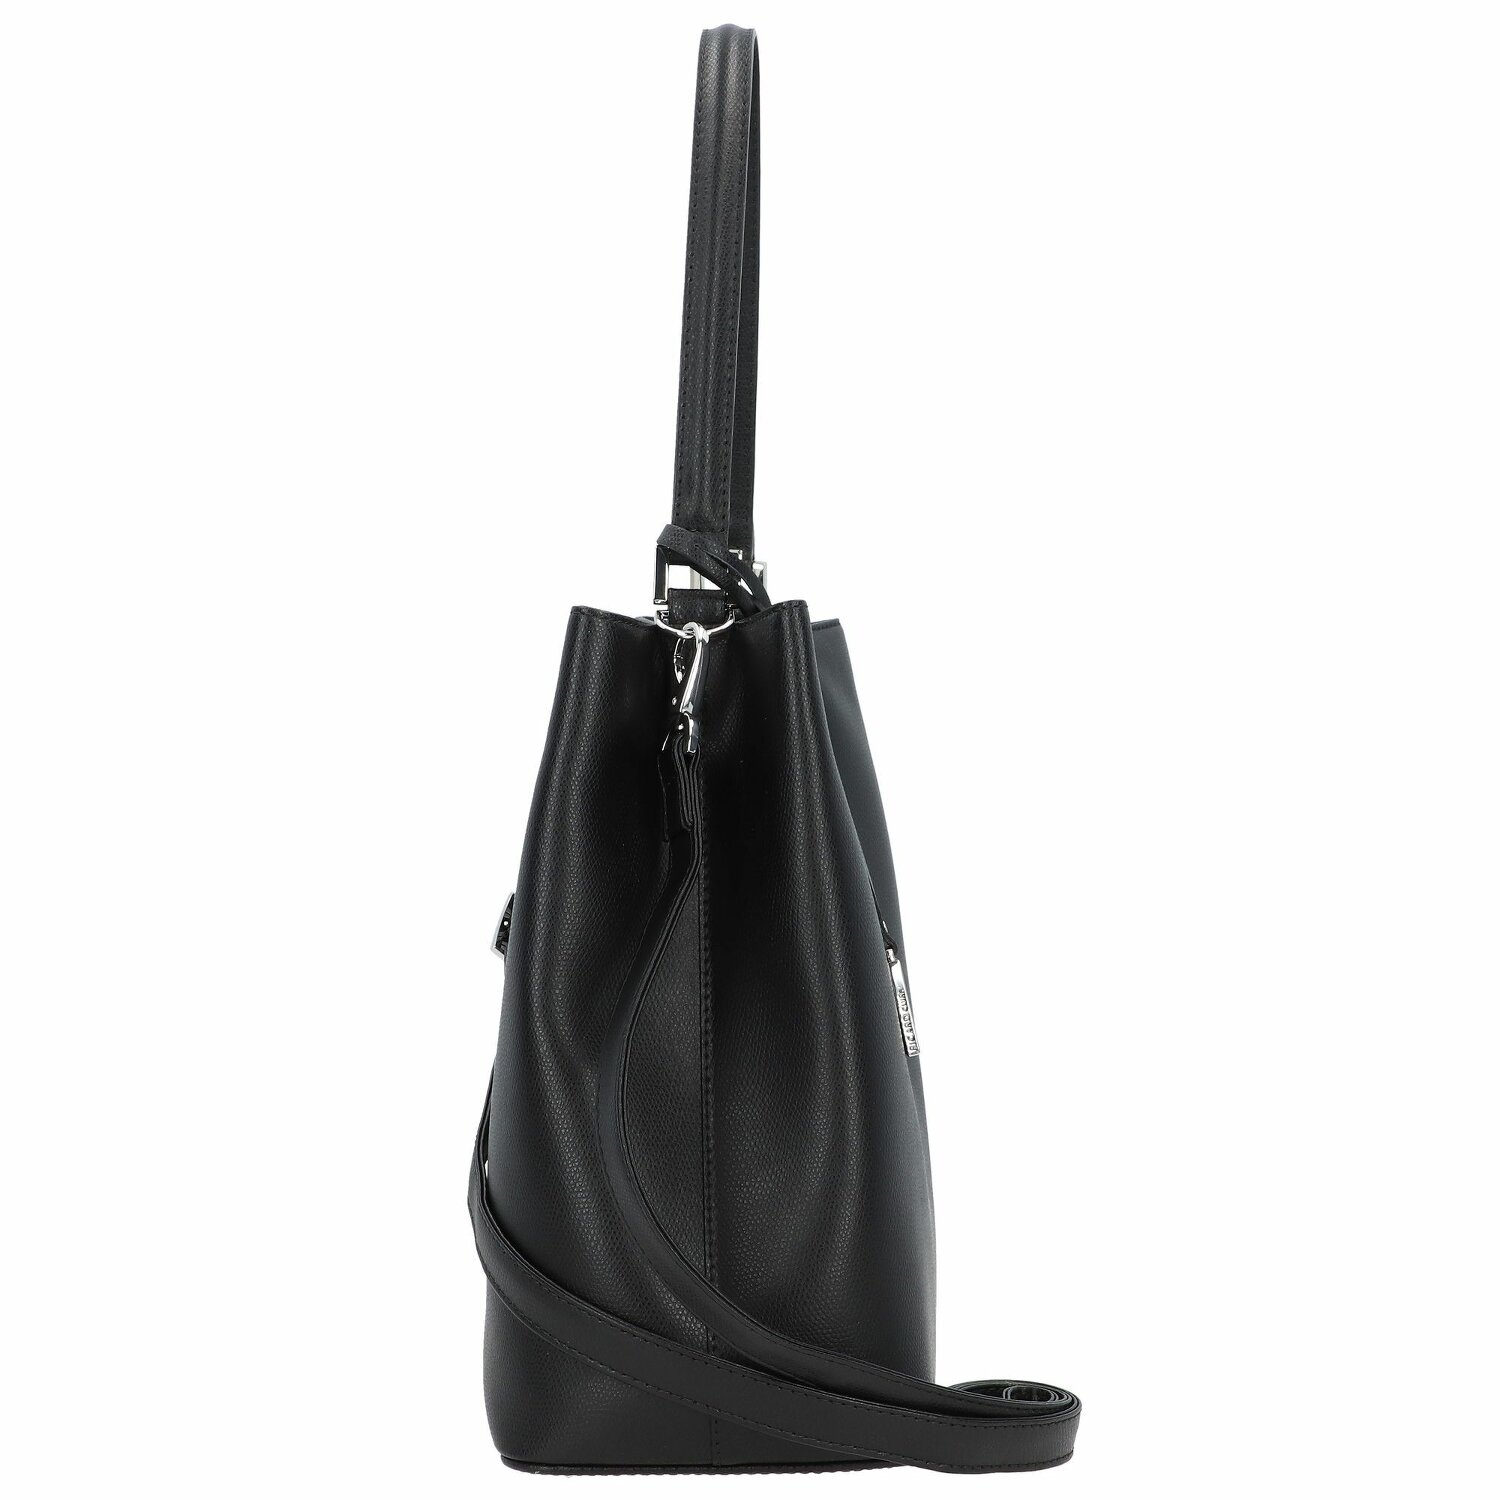 Picard Berlin women's bag leather 29 cm